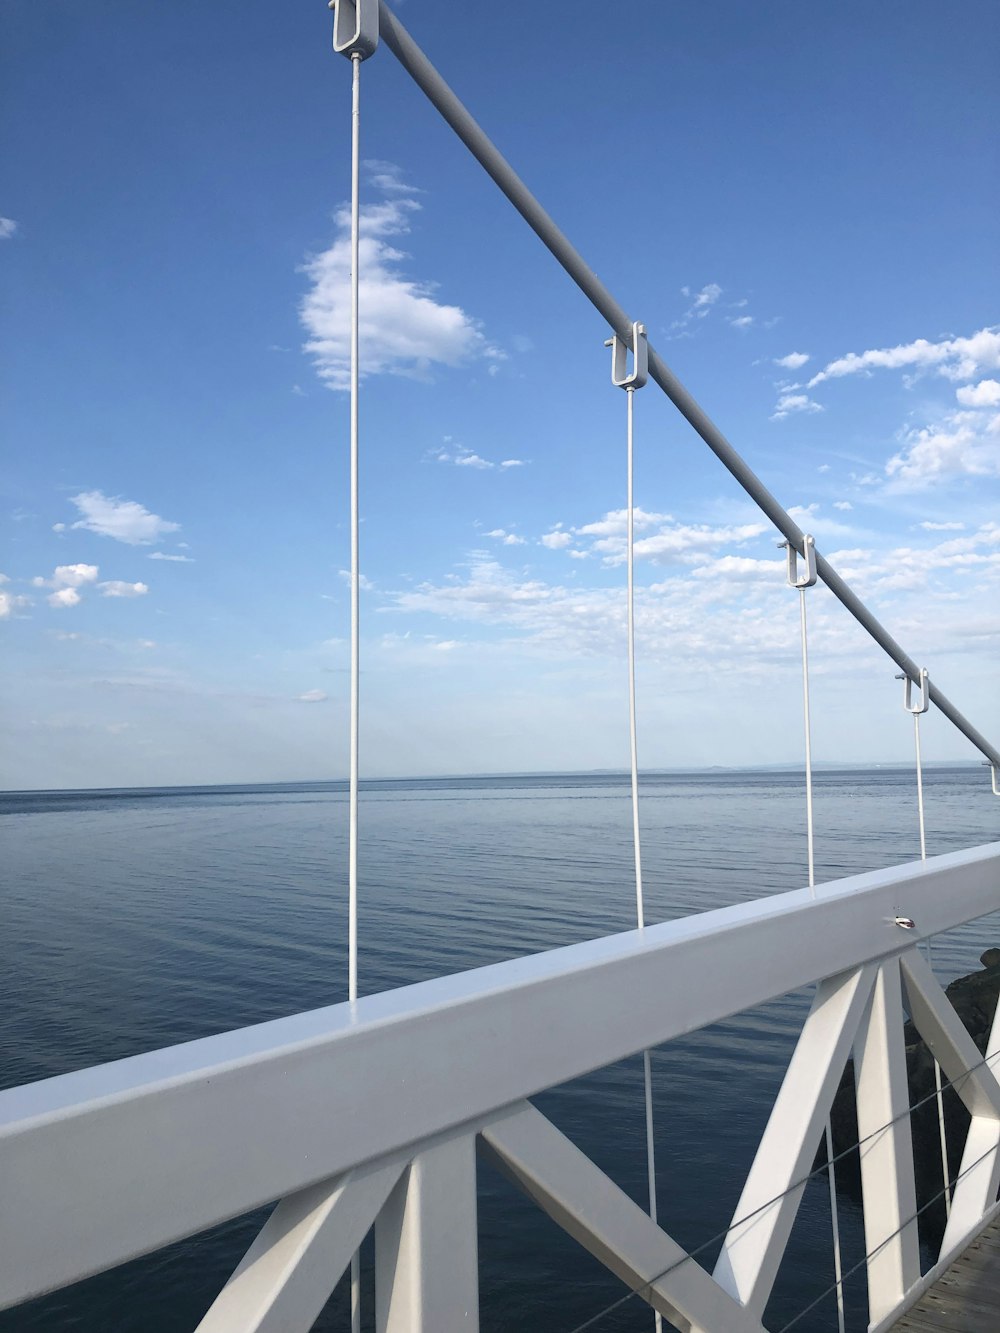 white metal bridge over blue sea under blue sky during daytime